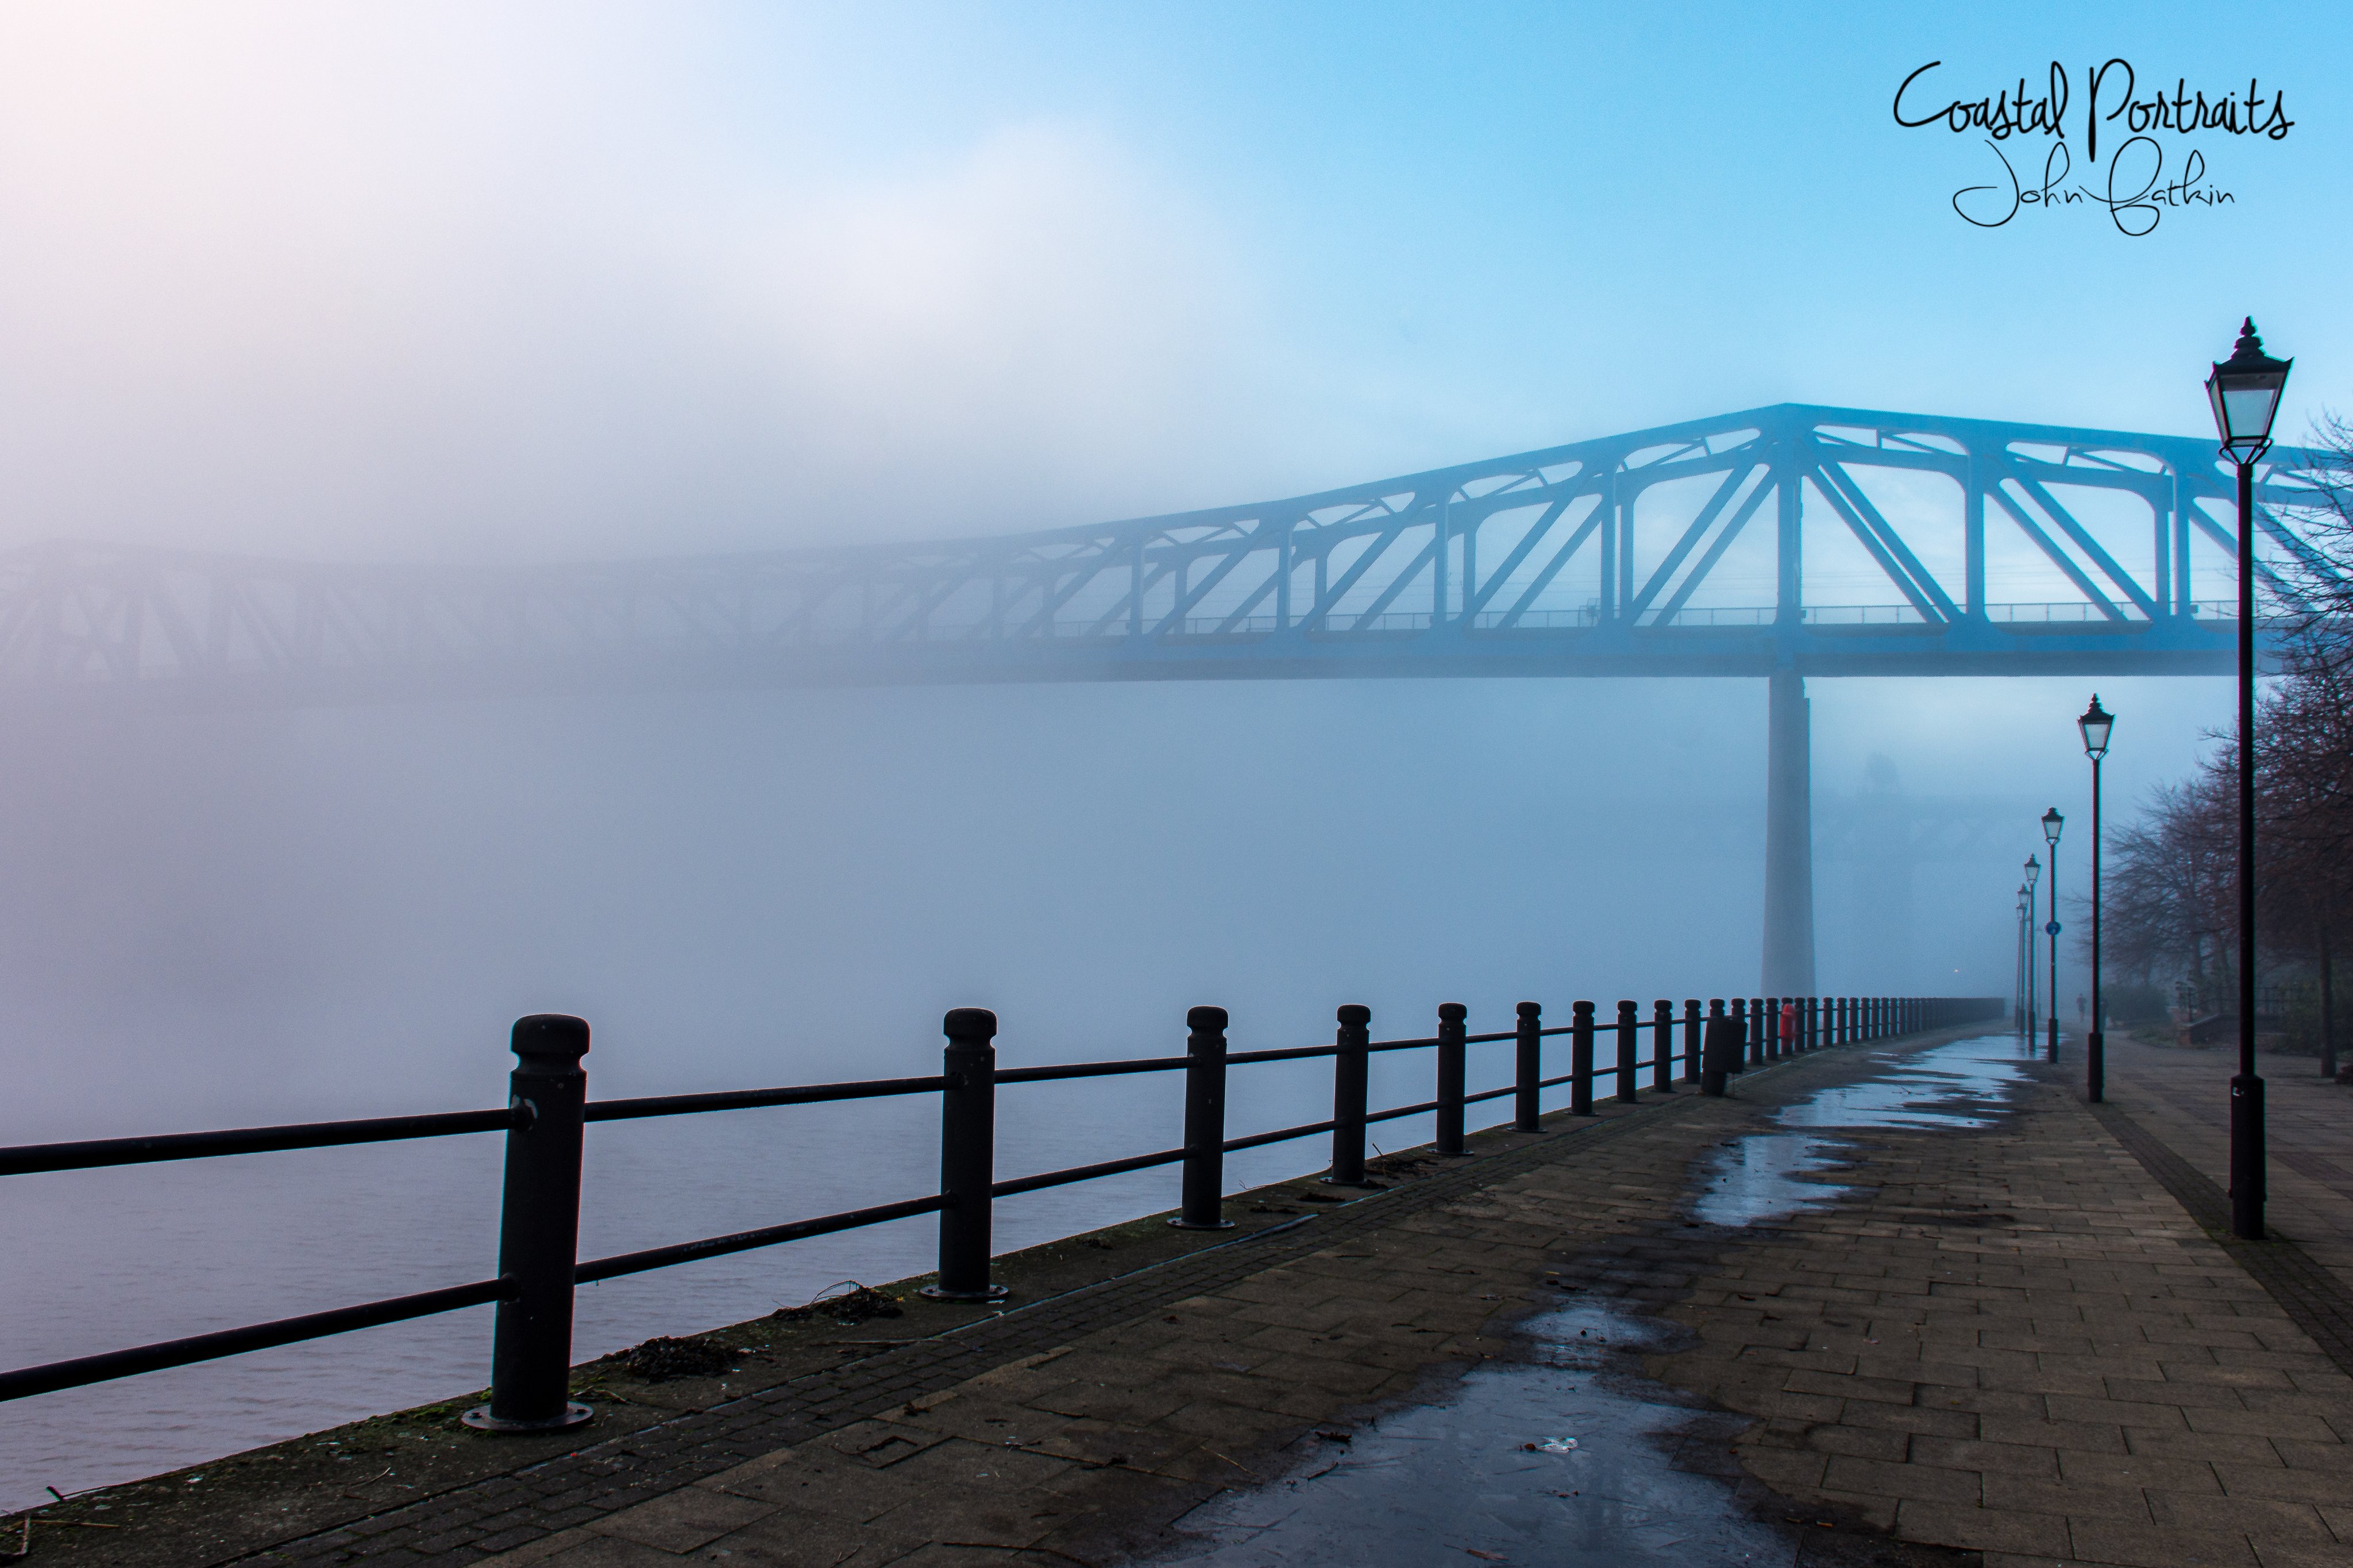 1st Place Fog on the Tyne by Coastal Portraits @johndefatkin